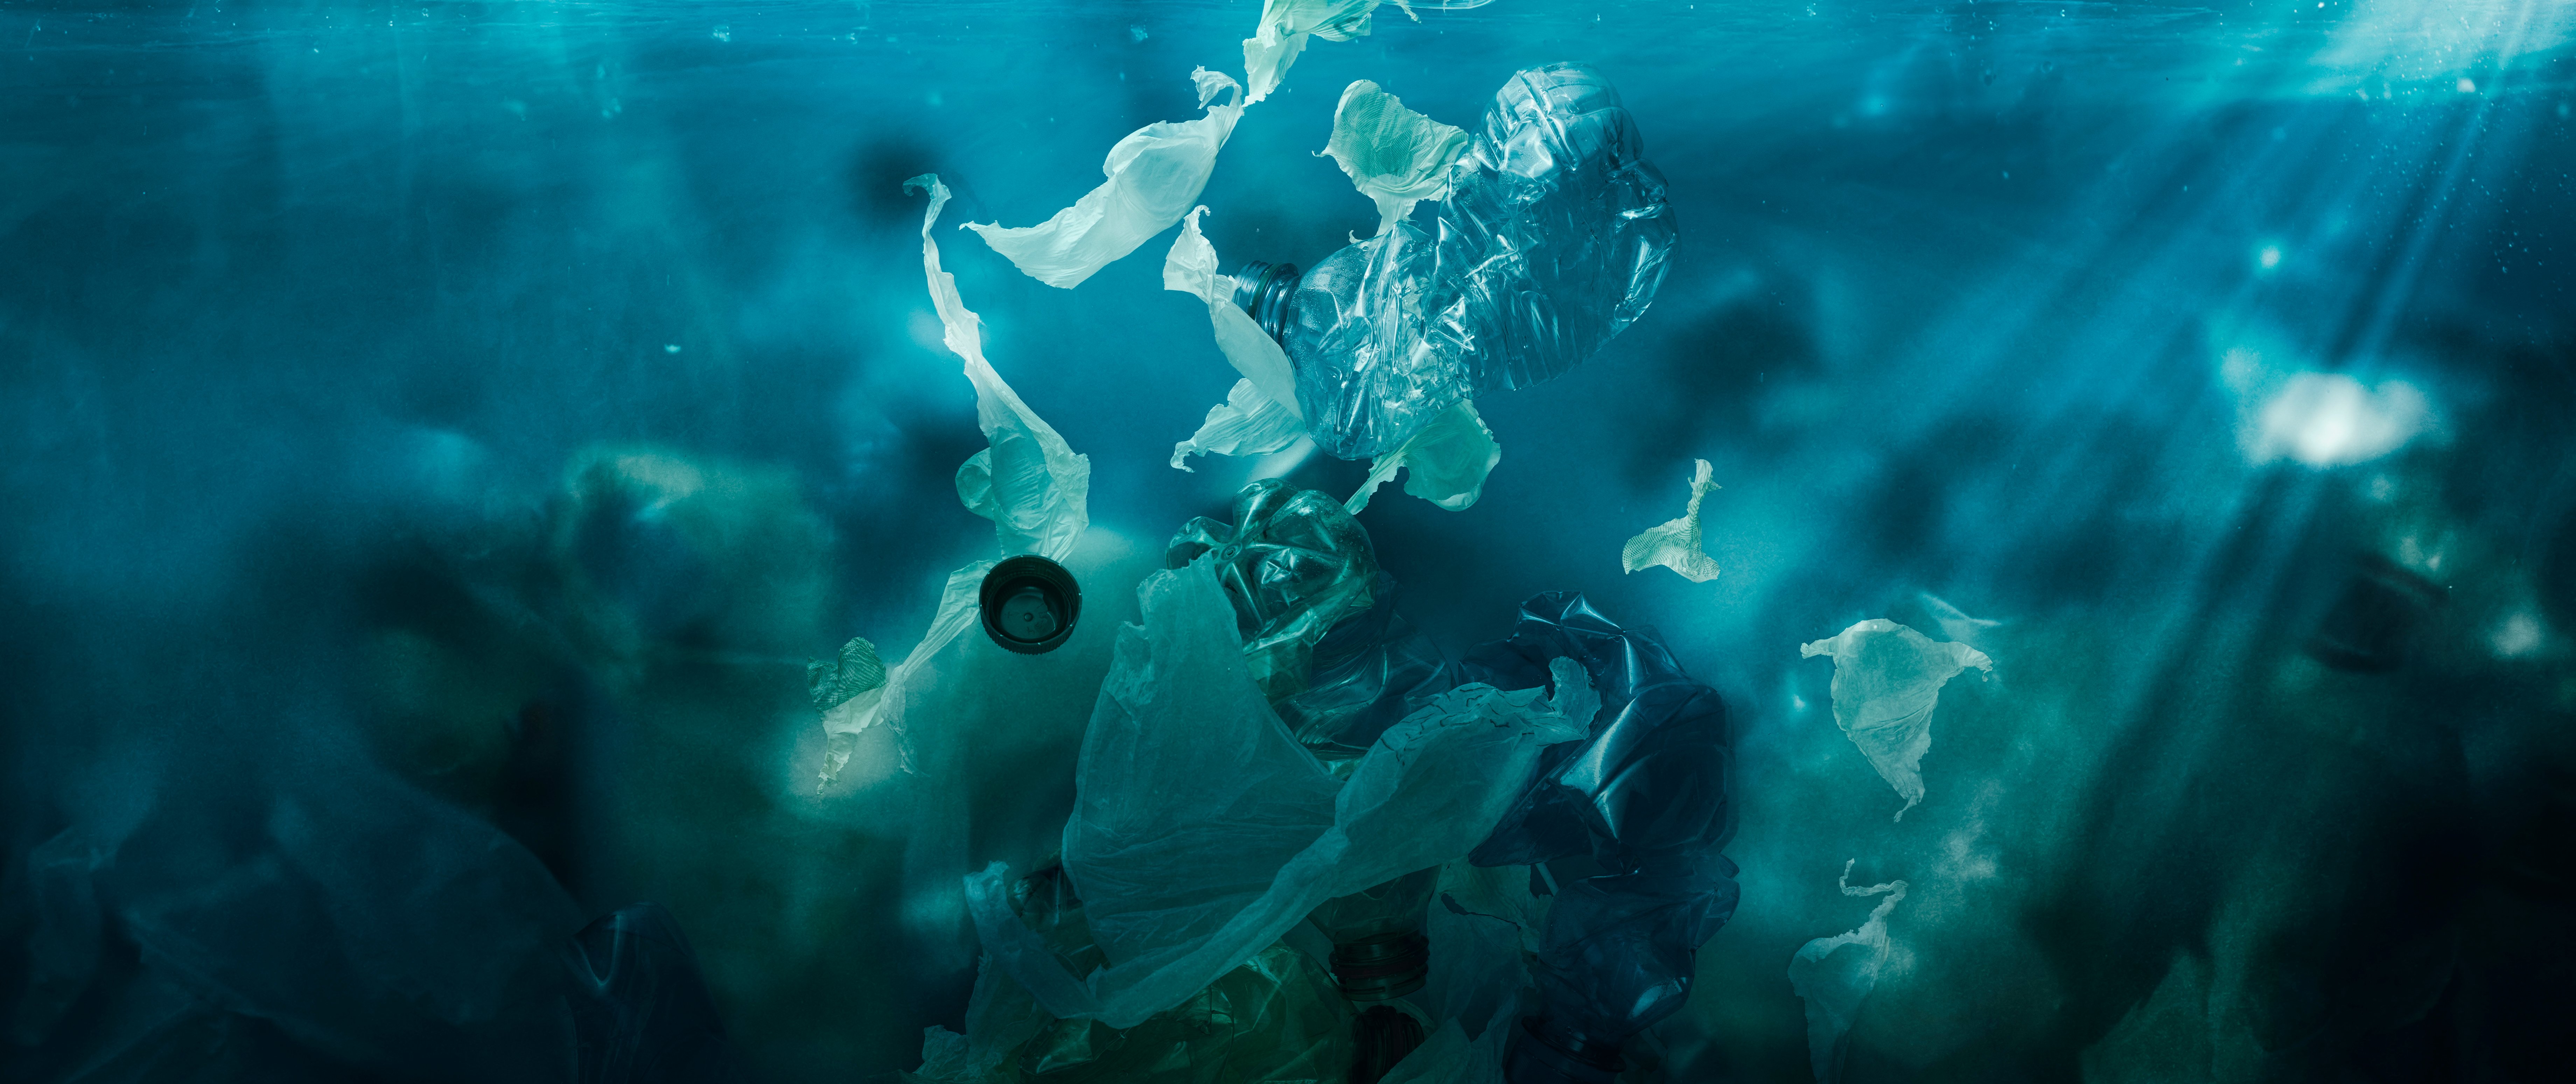 toxic-plastic-waste-floating-underwater-in-the-oce-2021-08-26-22-39-59-utc